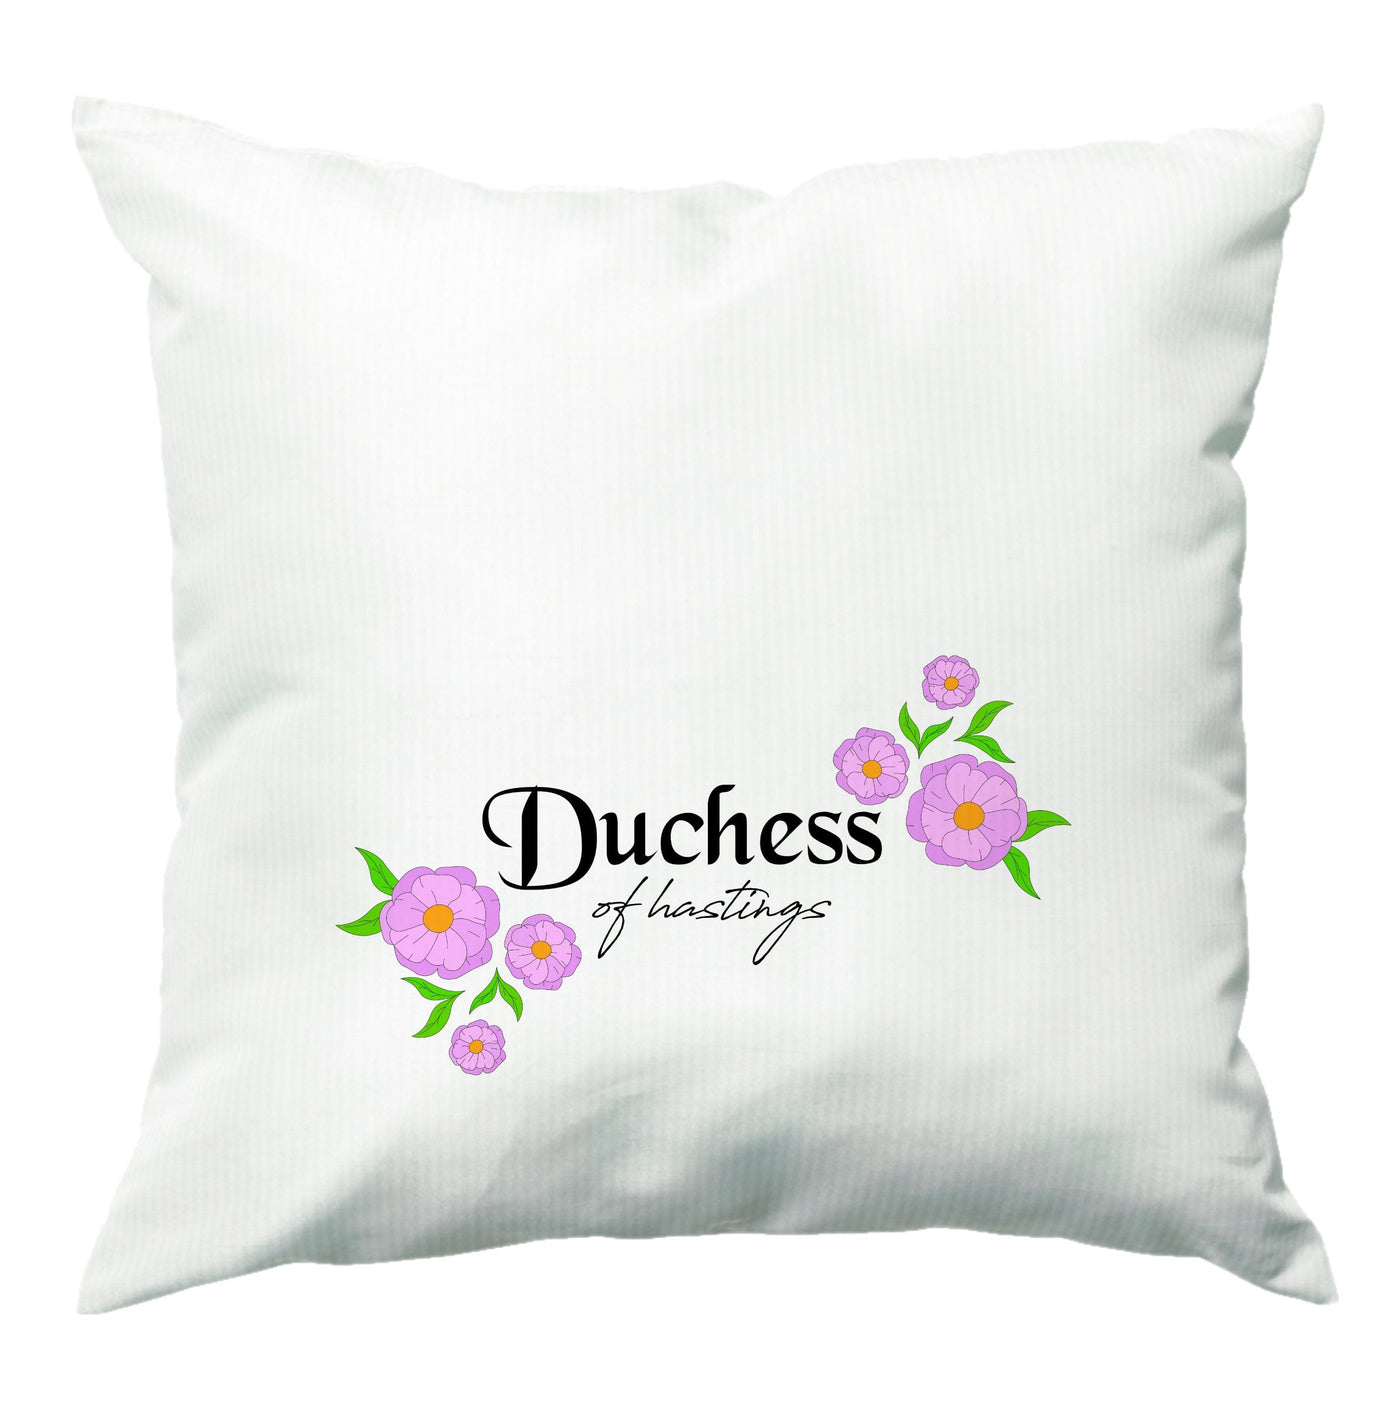 Duchess Of Hastings - Bridgerton Cushion